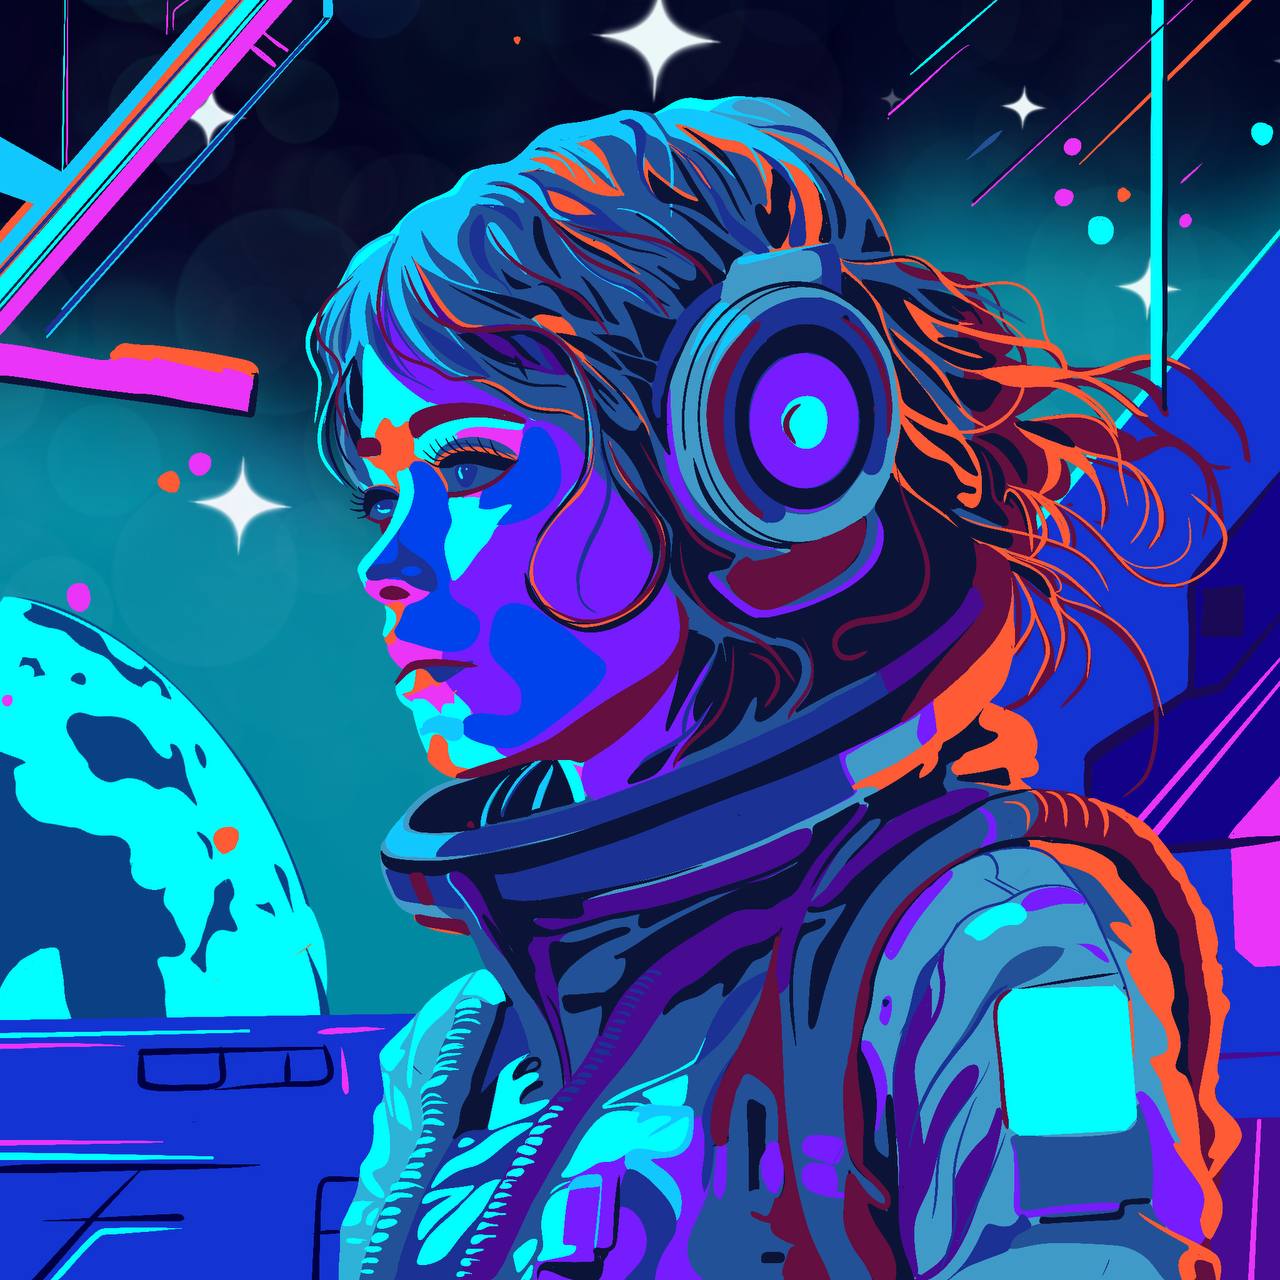 космическая девушка cover image.